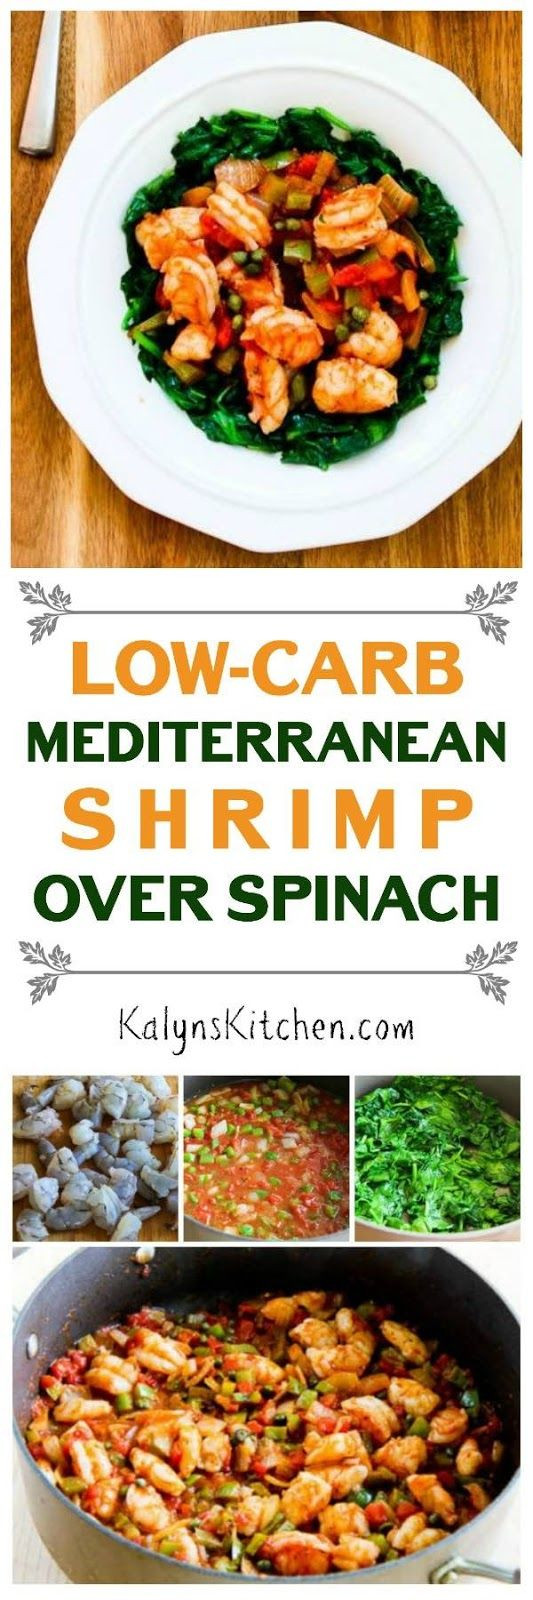 Low Carb Mediterranean Diet Recipes
 Low Carb Mediterranean Shrimp over Spinach